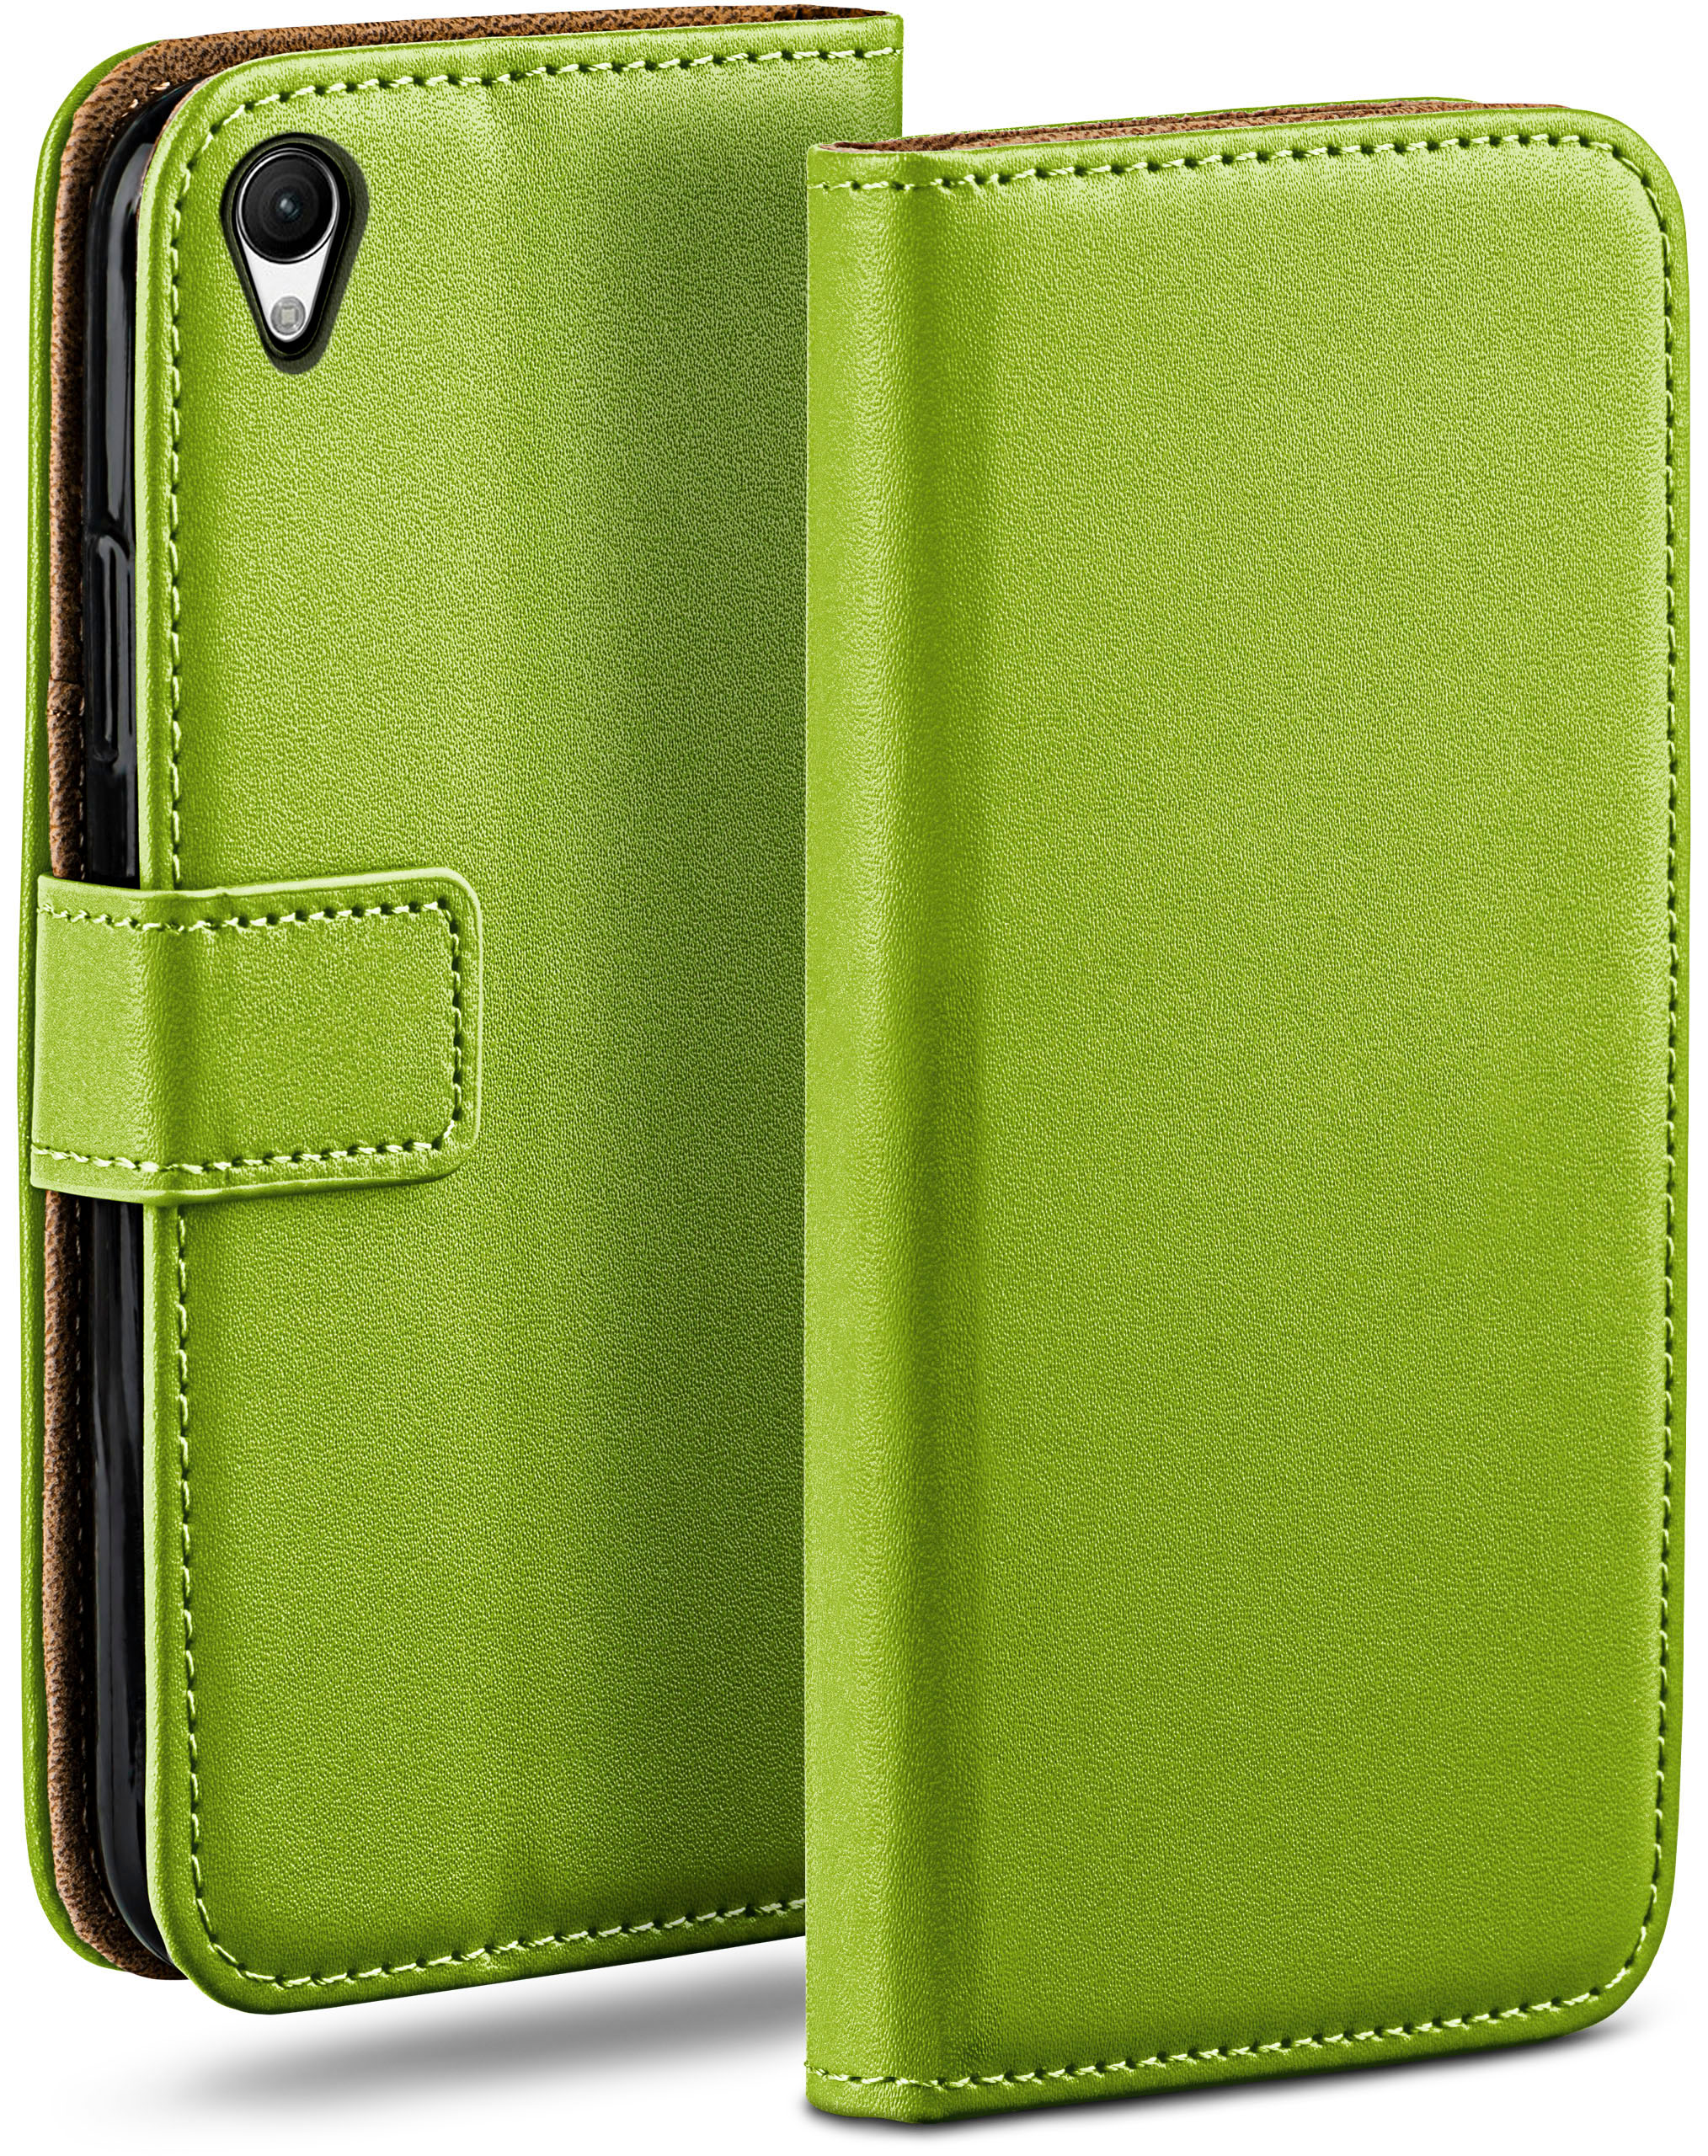 Lime-Green Book Xperia M4 Case, Aqua, Sony, Bookcover, MOEX